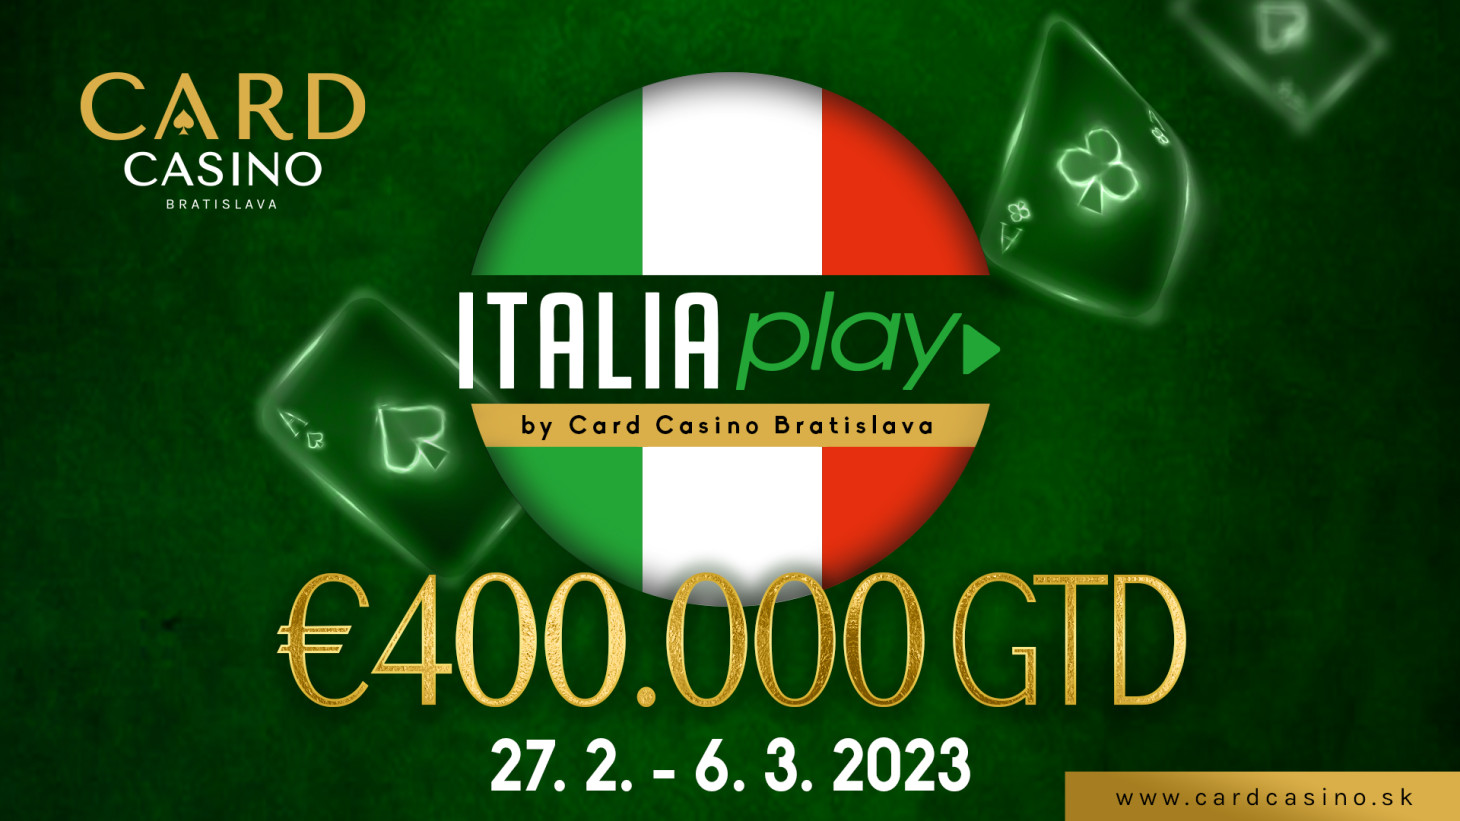 Italia Play Festival comes to Card Casino with a €400,000 guarantee